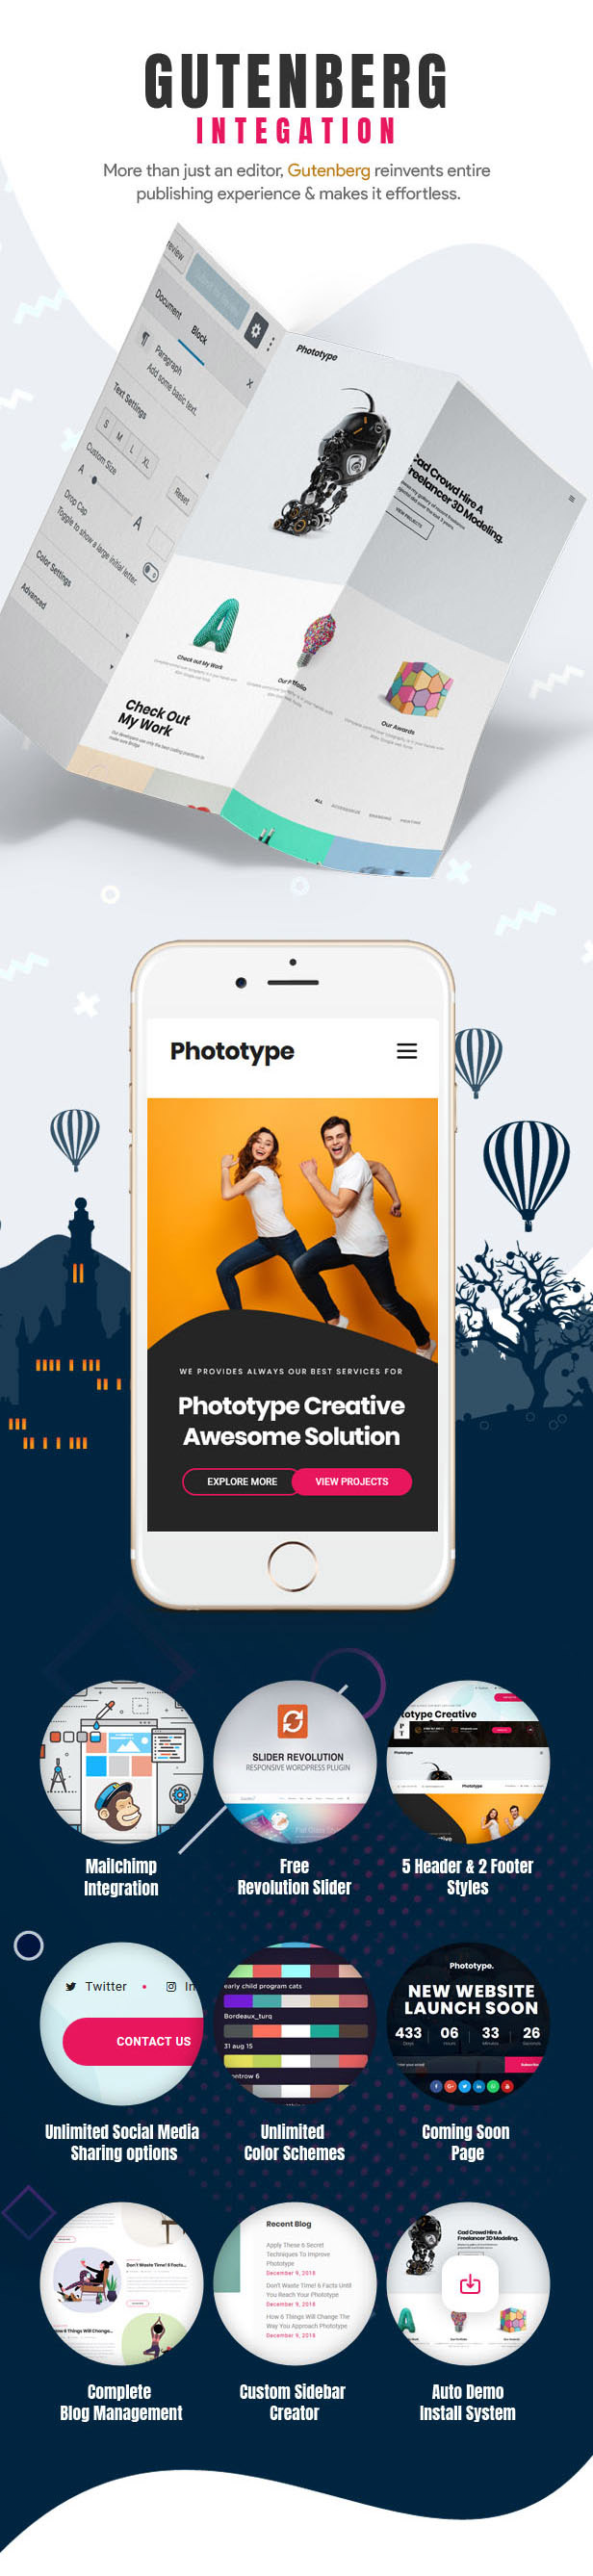 Phototype - New Elementor Portoflio WordPress Theme 2019 for Agency, Photography Sites - 4